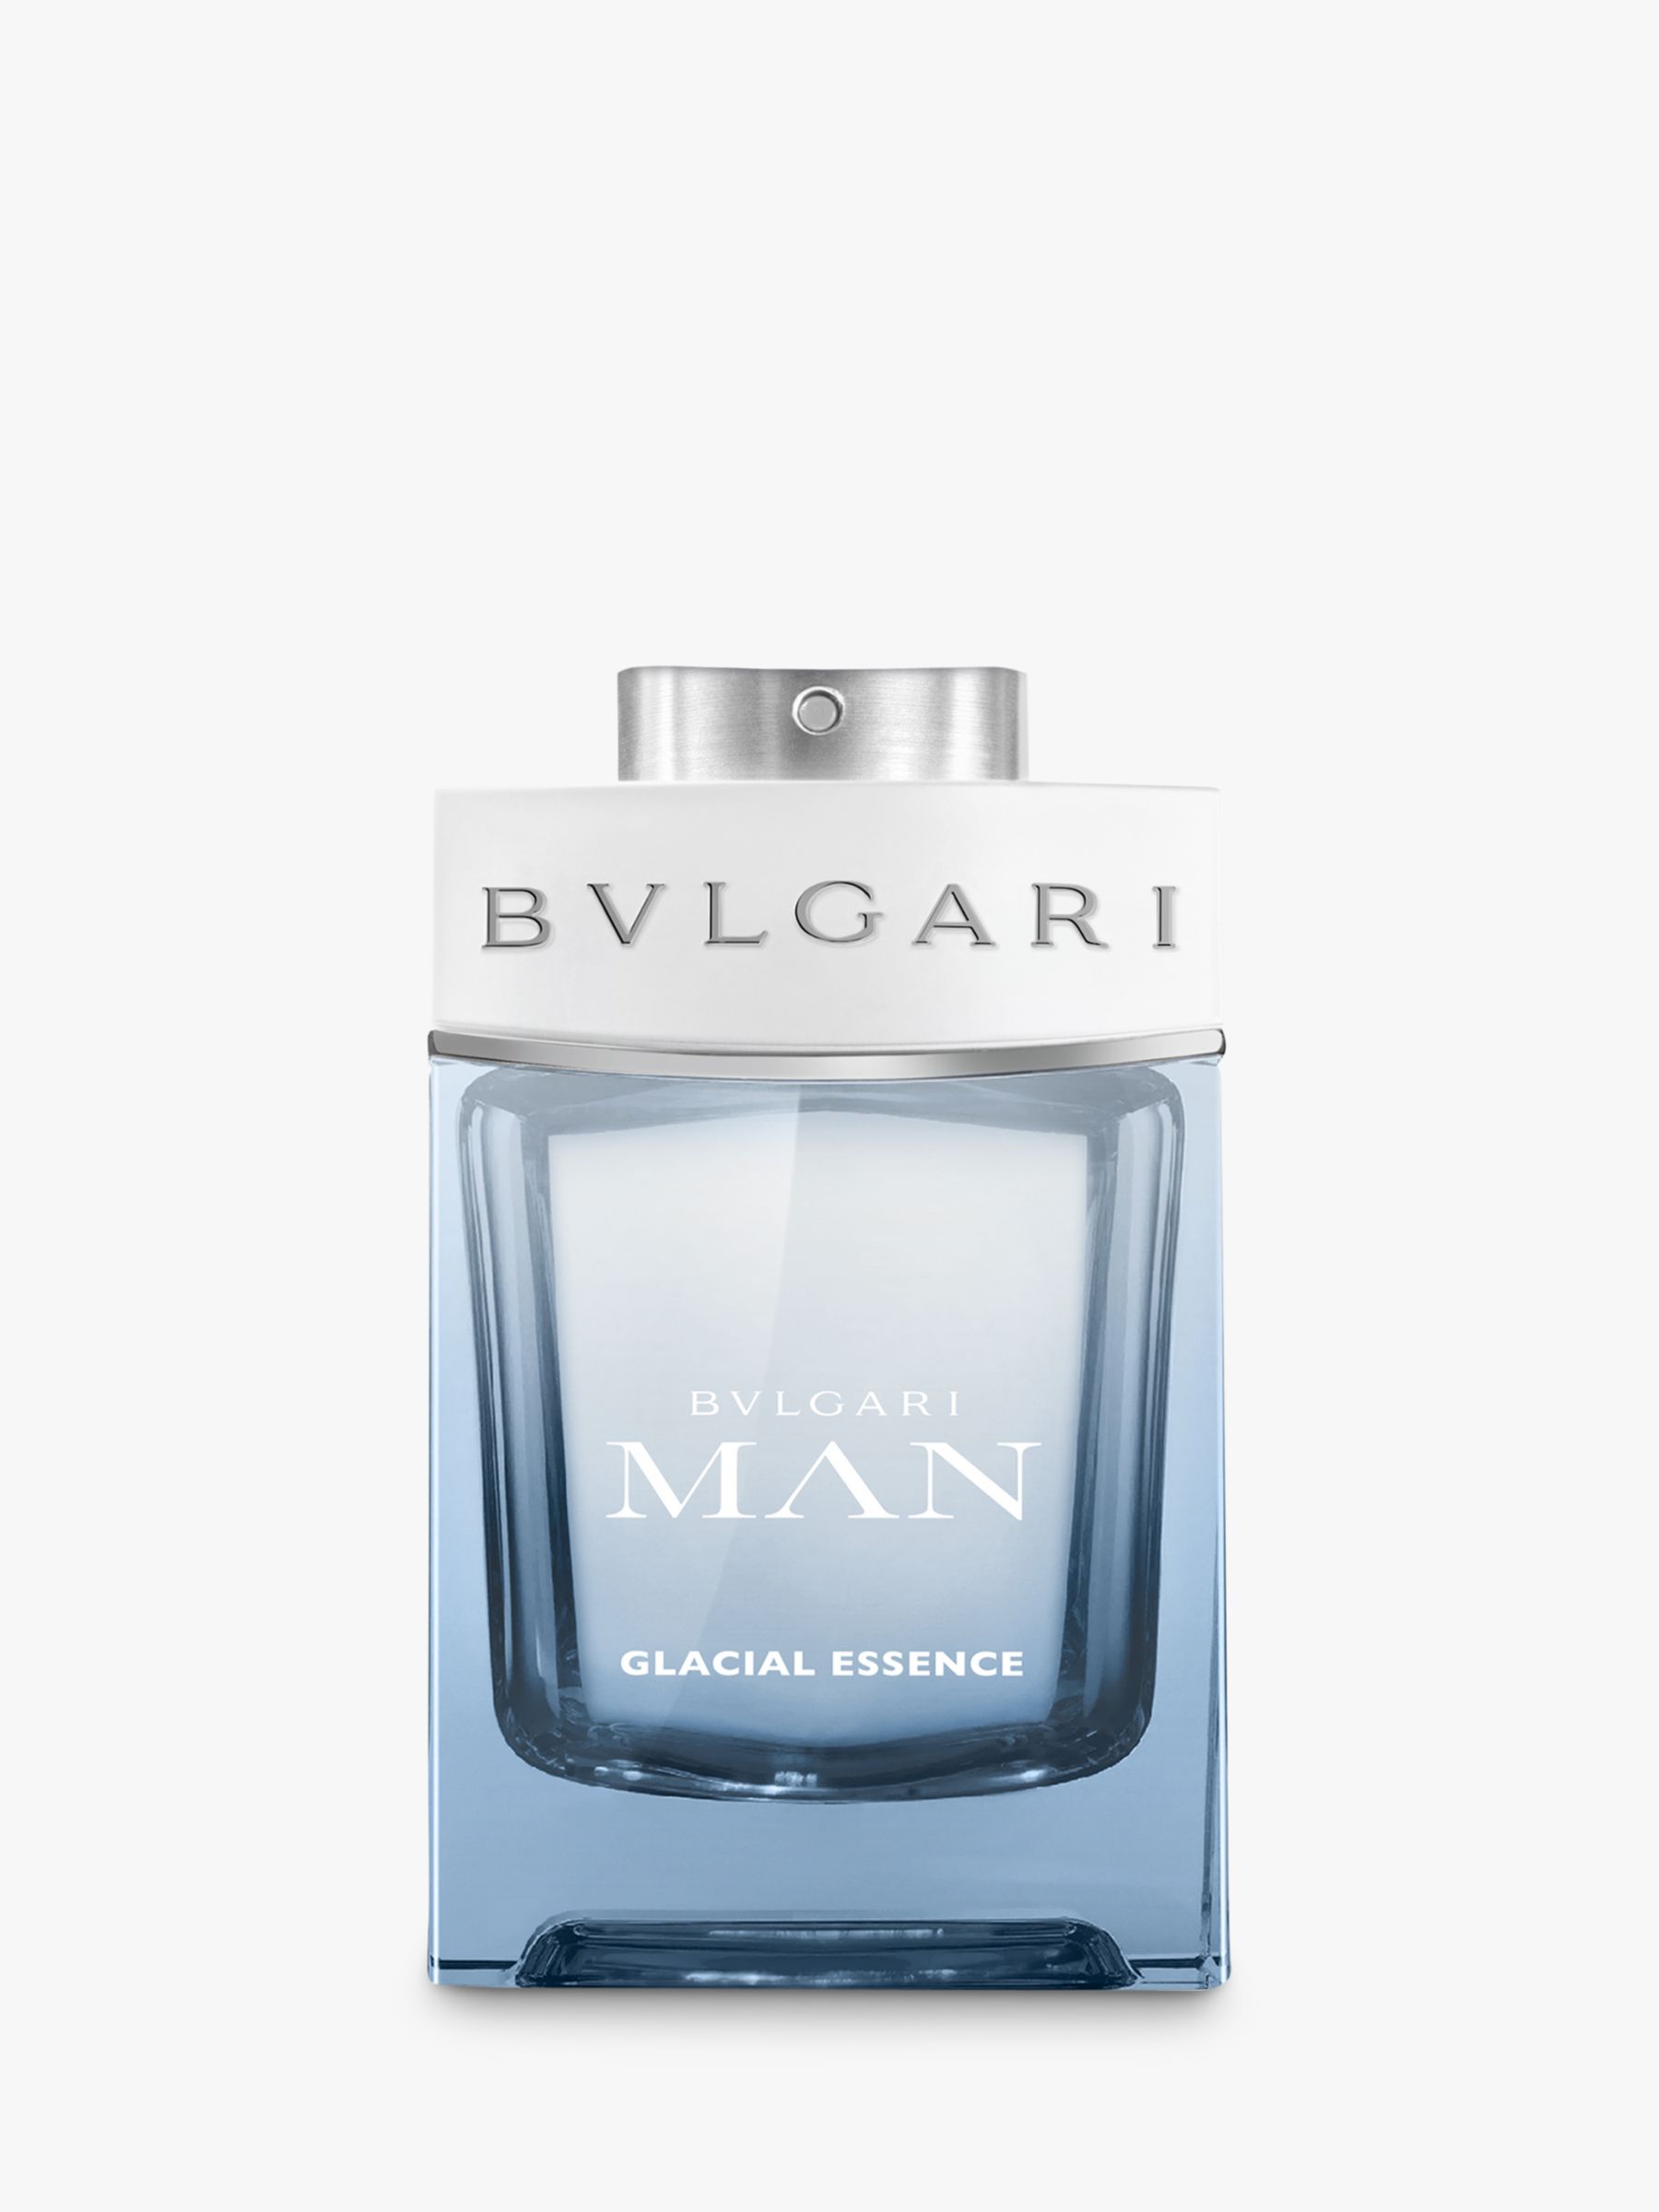 BVLGARI Man Glacial Essence Eau de Parfum, 60ml 1